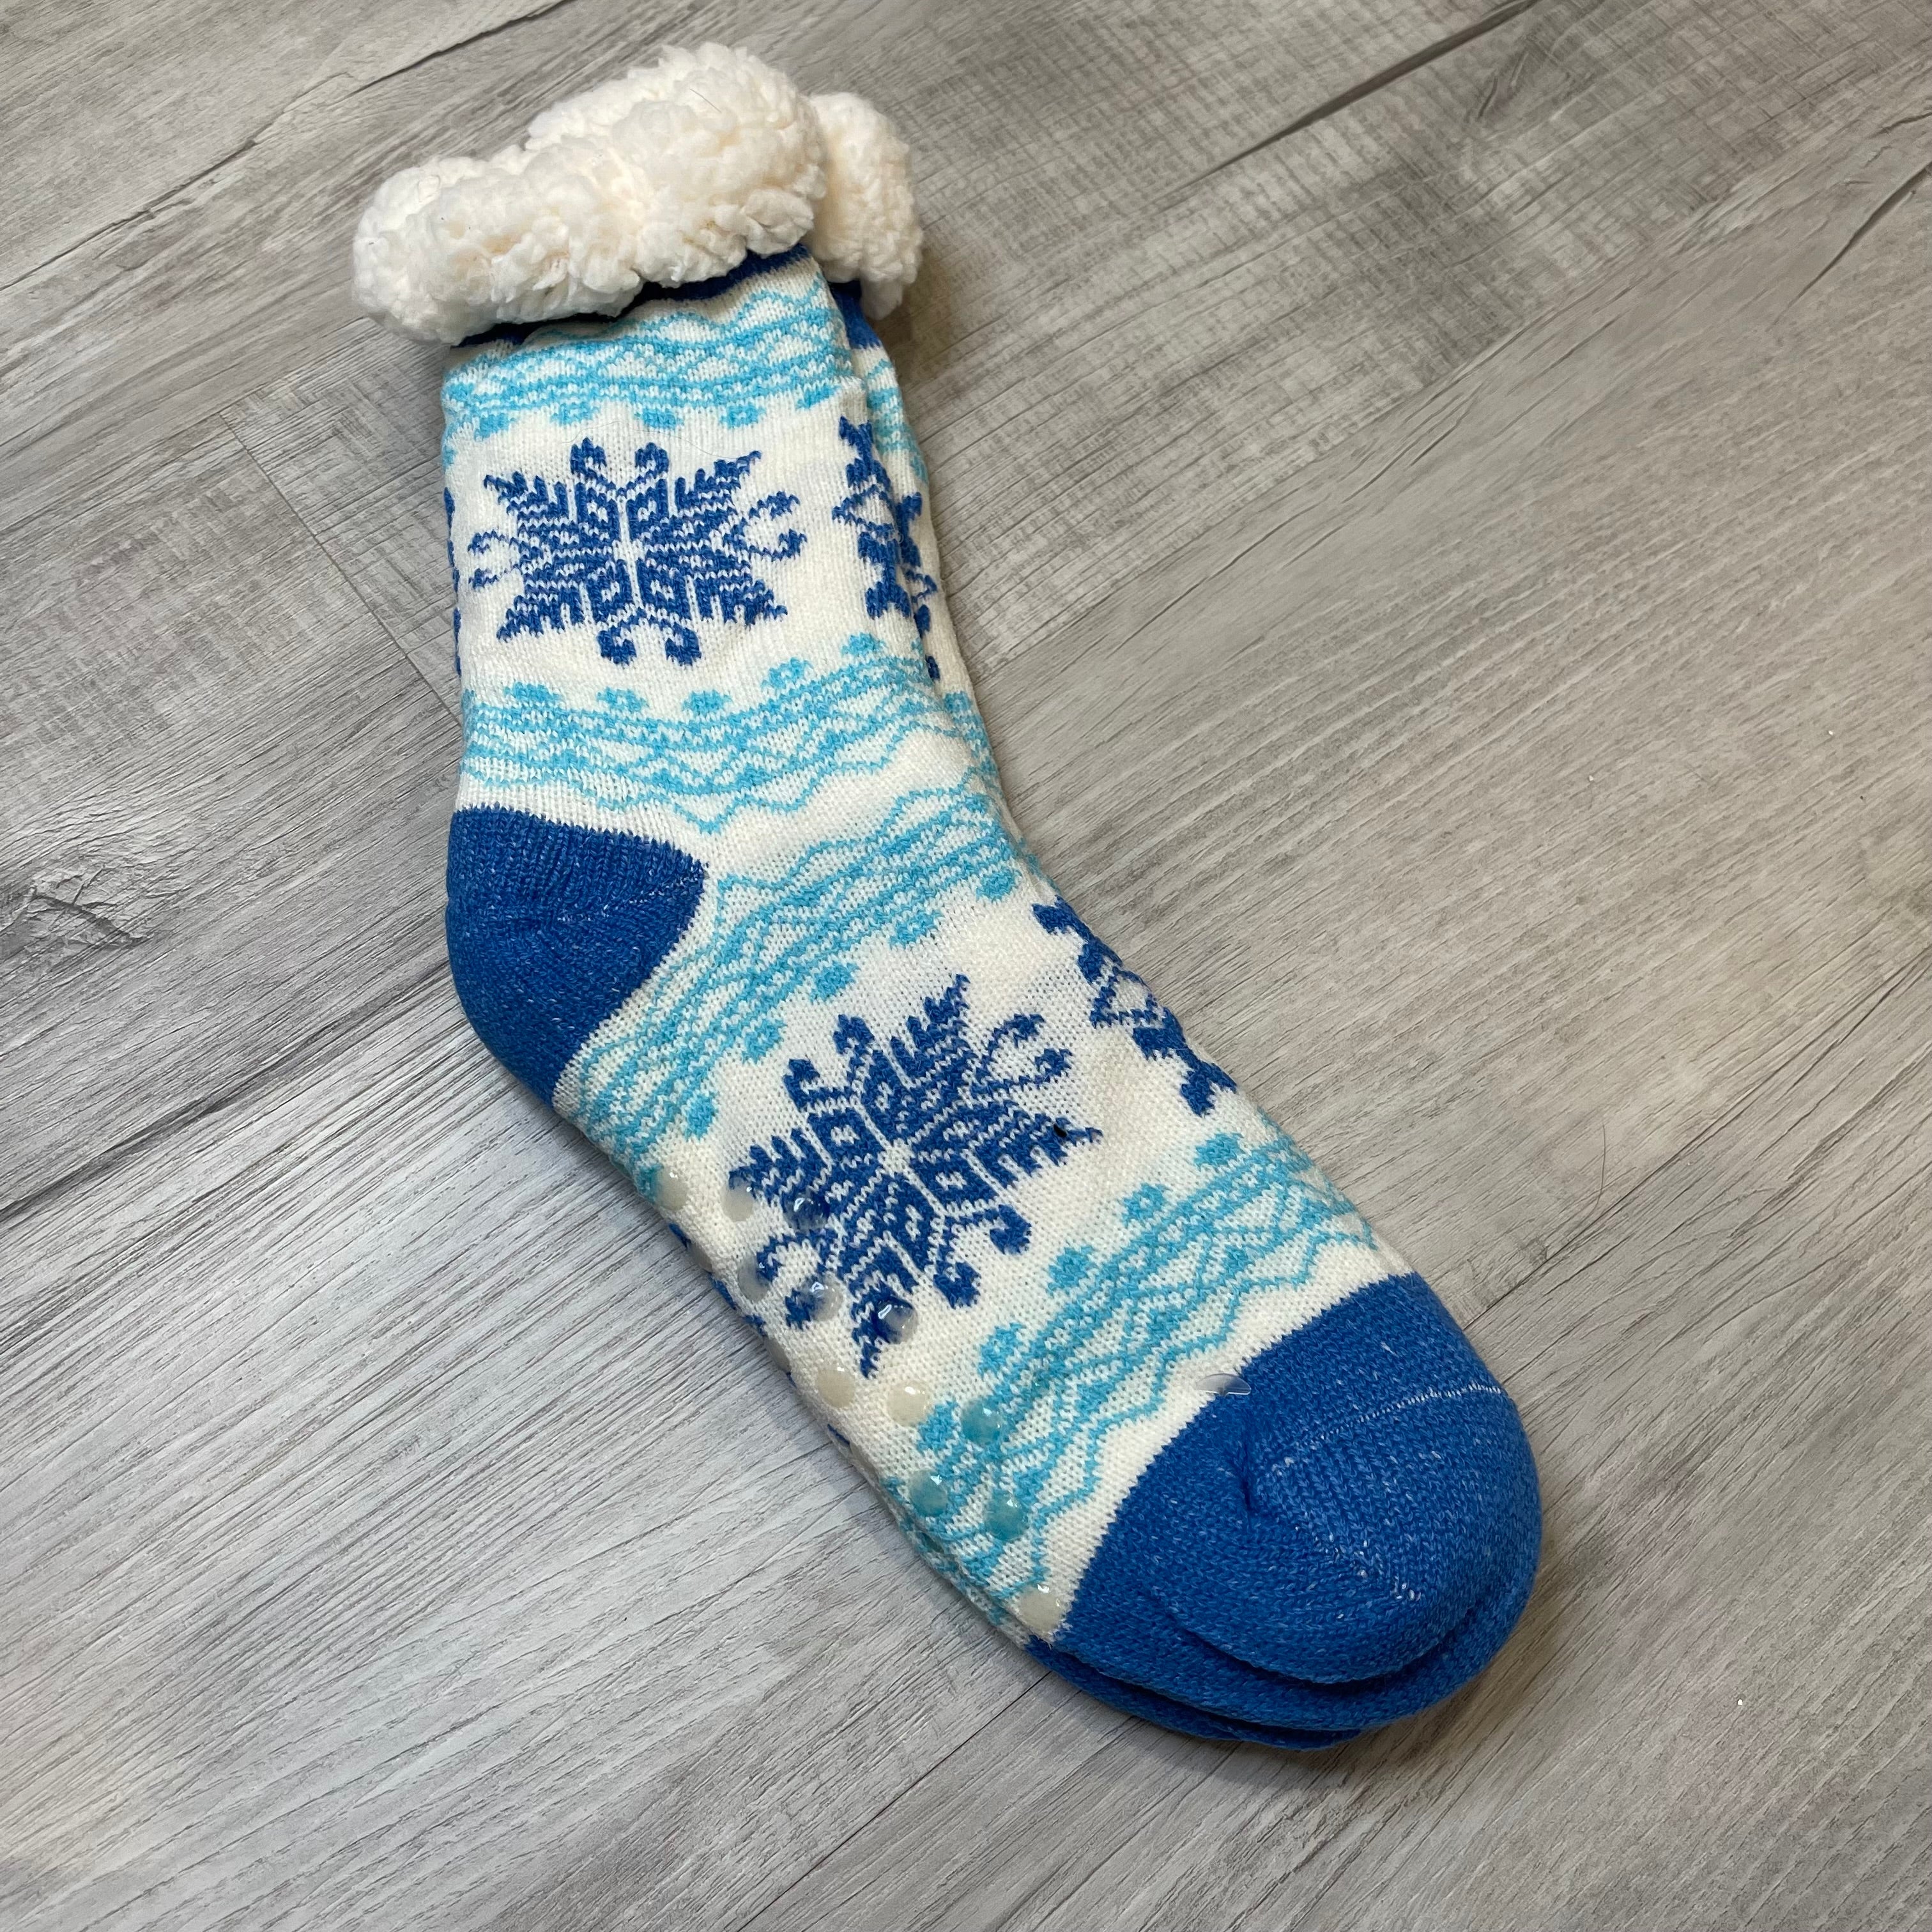 J.Jill - Cozy fair isle slipper socks add a festive toasty-touch